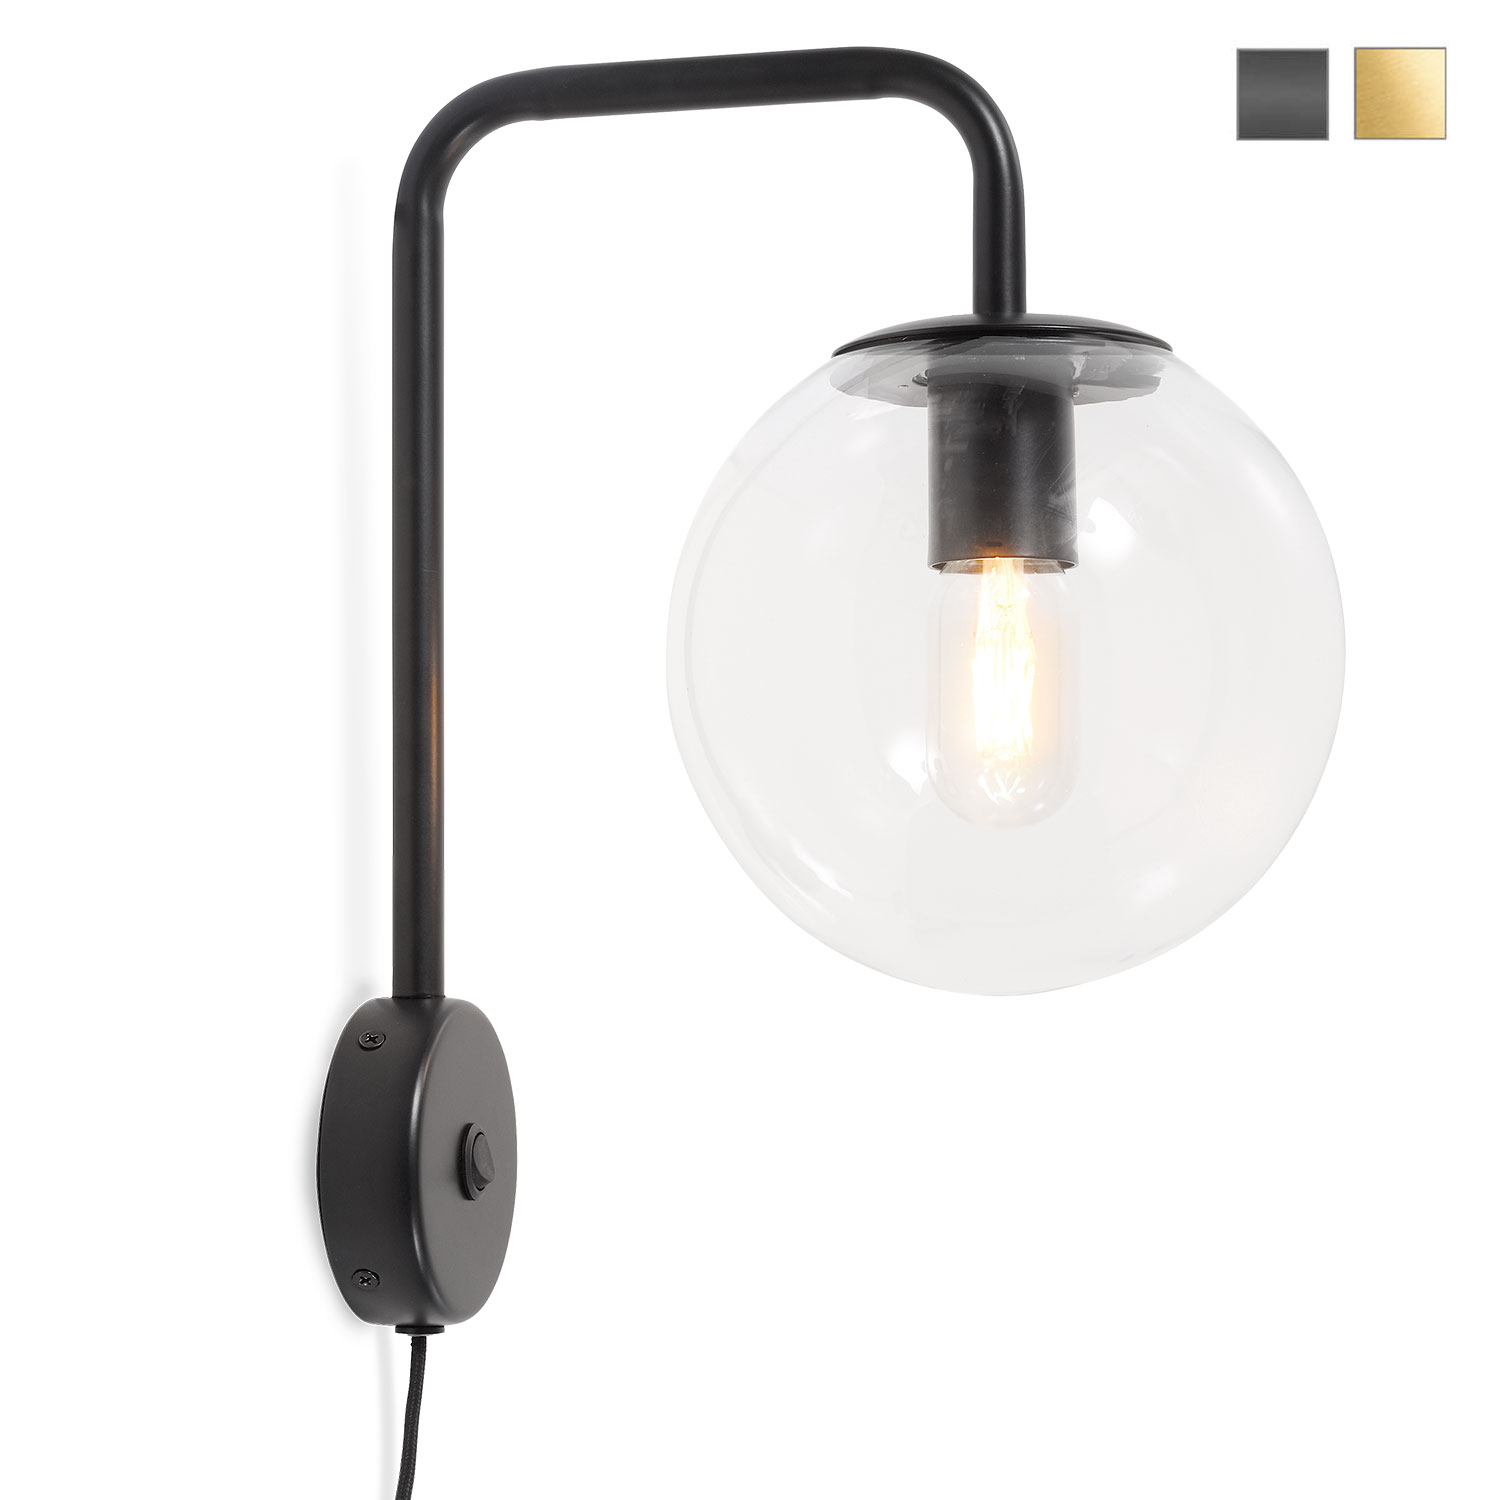 Moderne Glaskugel-Wandlampe mit Kabel, golden oder schwarz: Moderne Wandlampe mit 30 cm-Glaskugel am Bogenarm, schwarze Ausführung